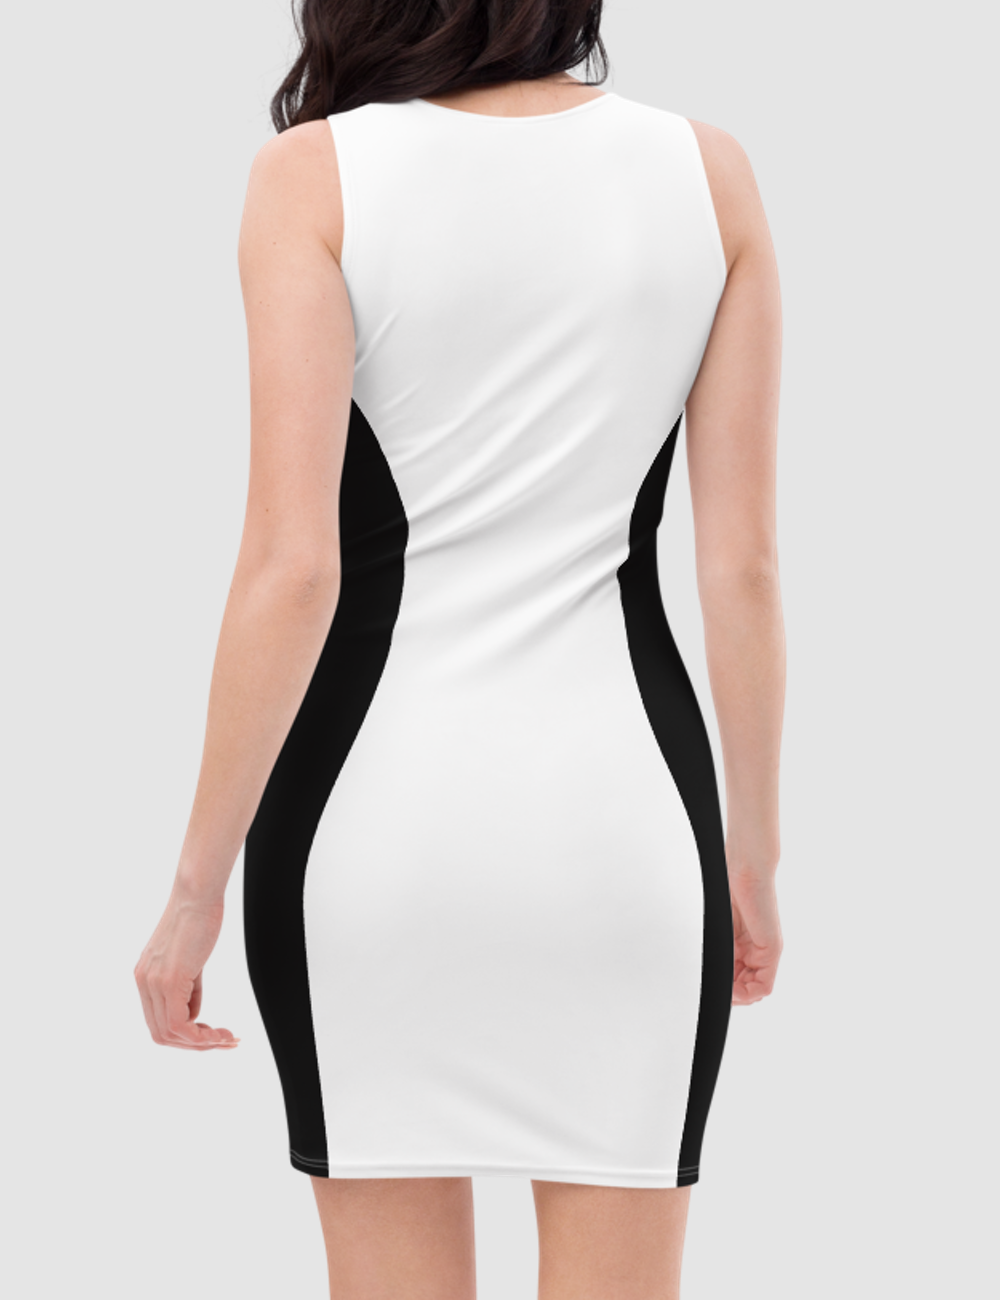 White Black Modal | Women's Sleeveless Fitted Sublimated Dress OniTakai